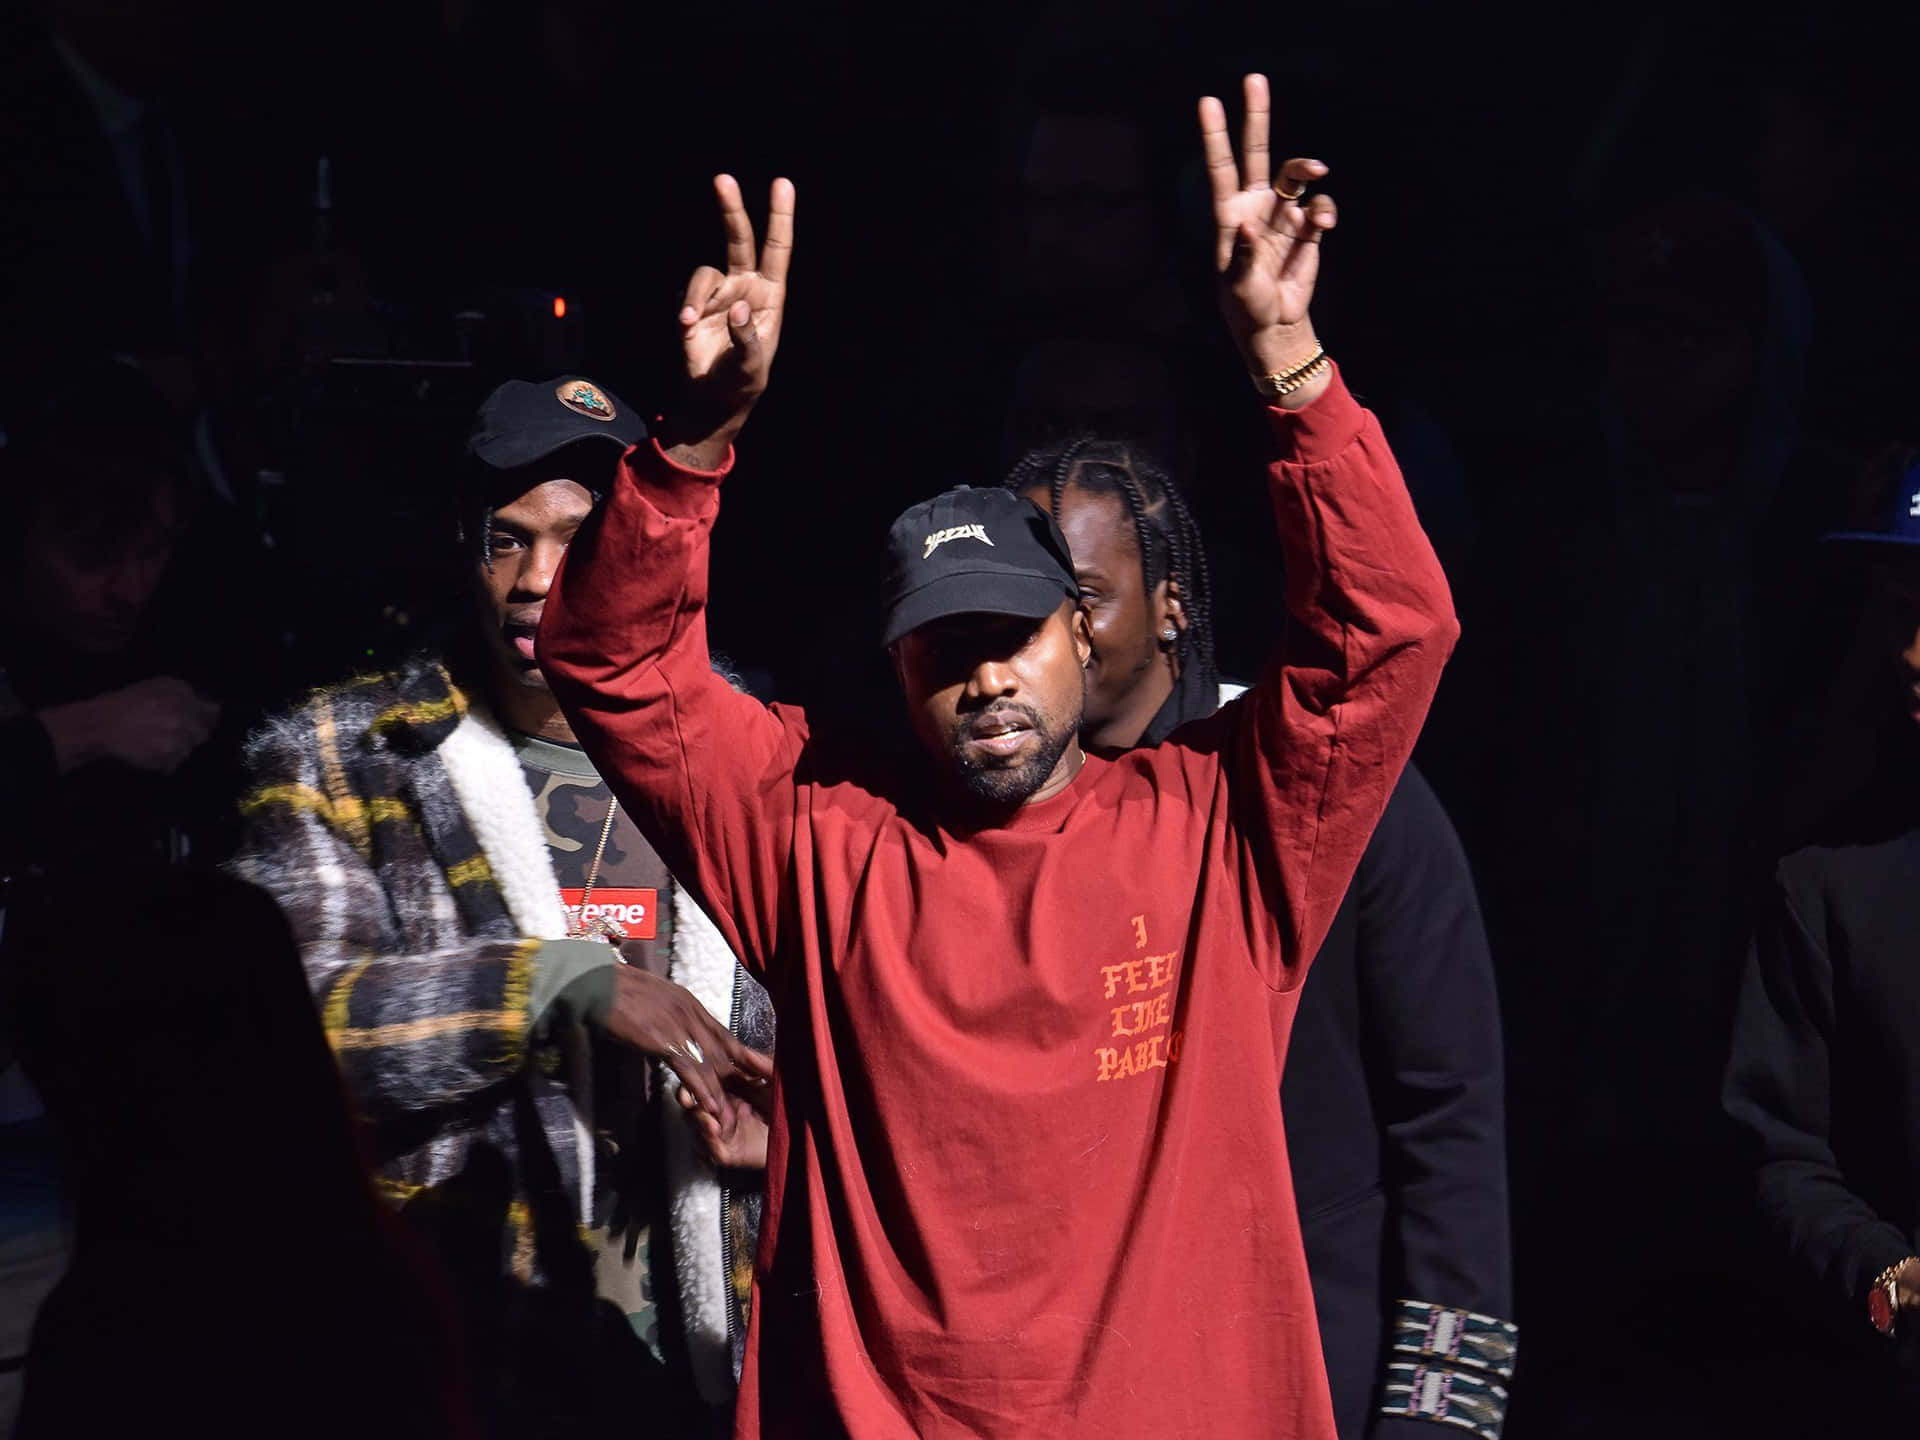 Kanye - An Iconic Music Innovator